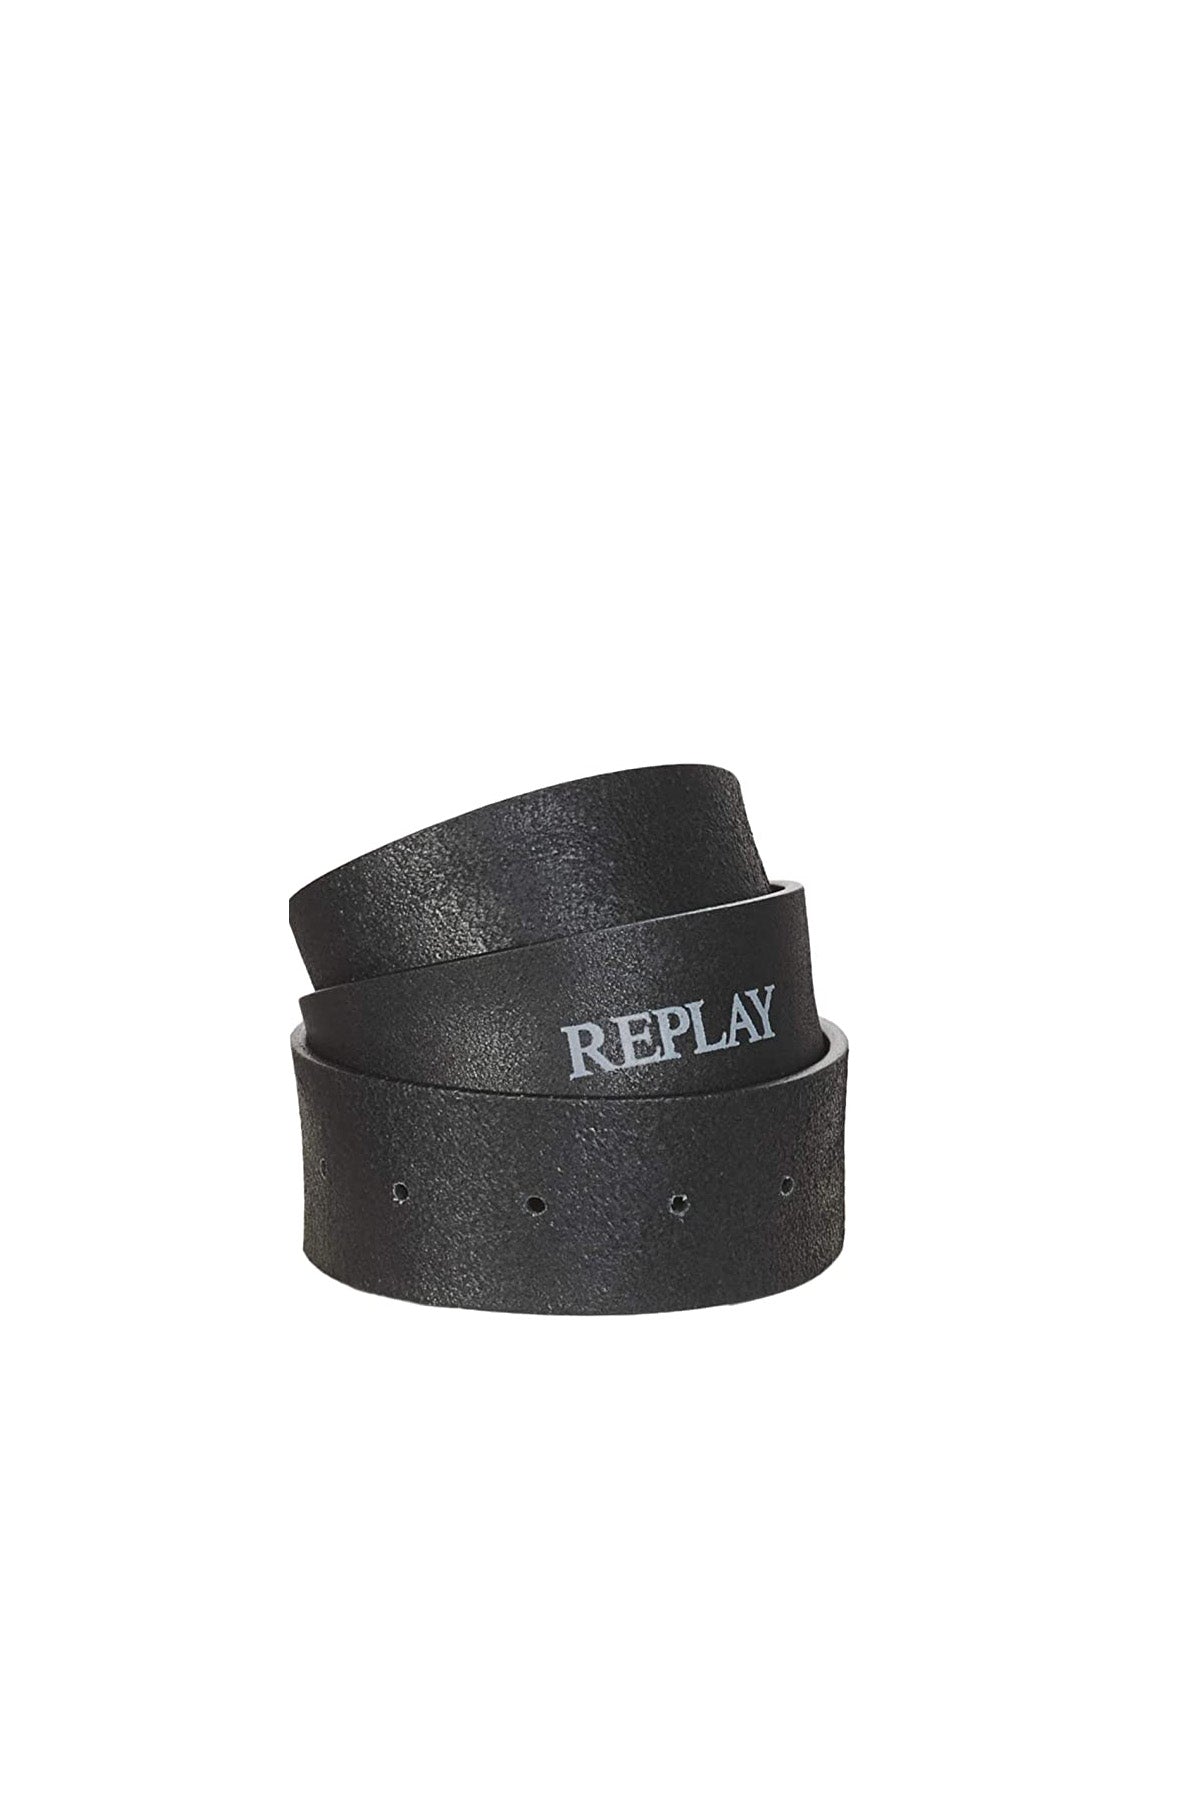 Replay Metal Tokalı Deri Kemer-Libas Trendy Fashion Store